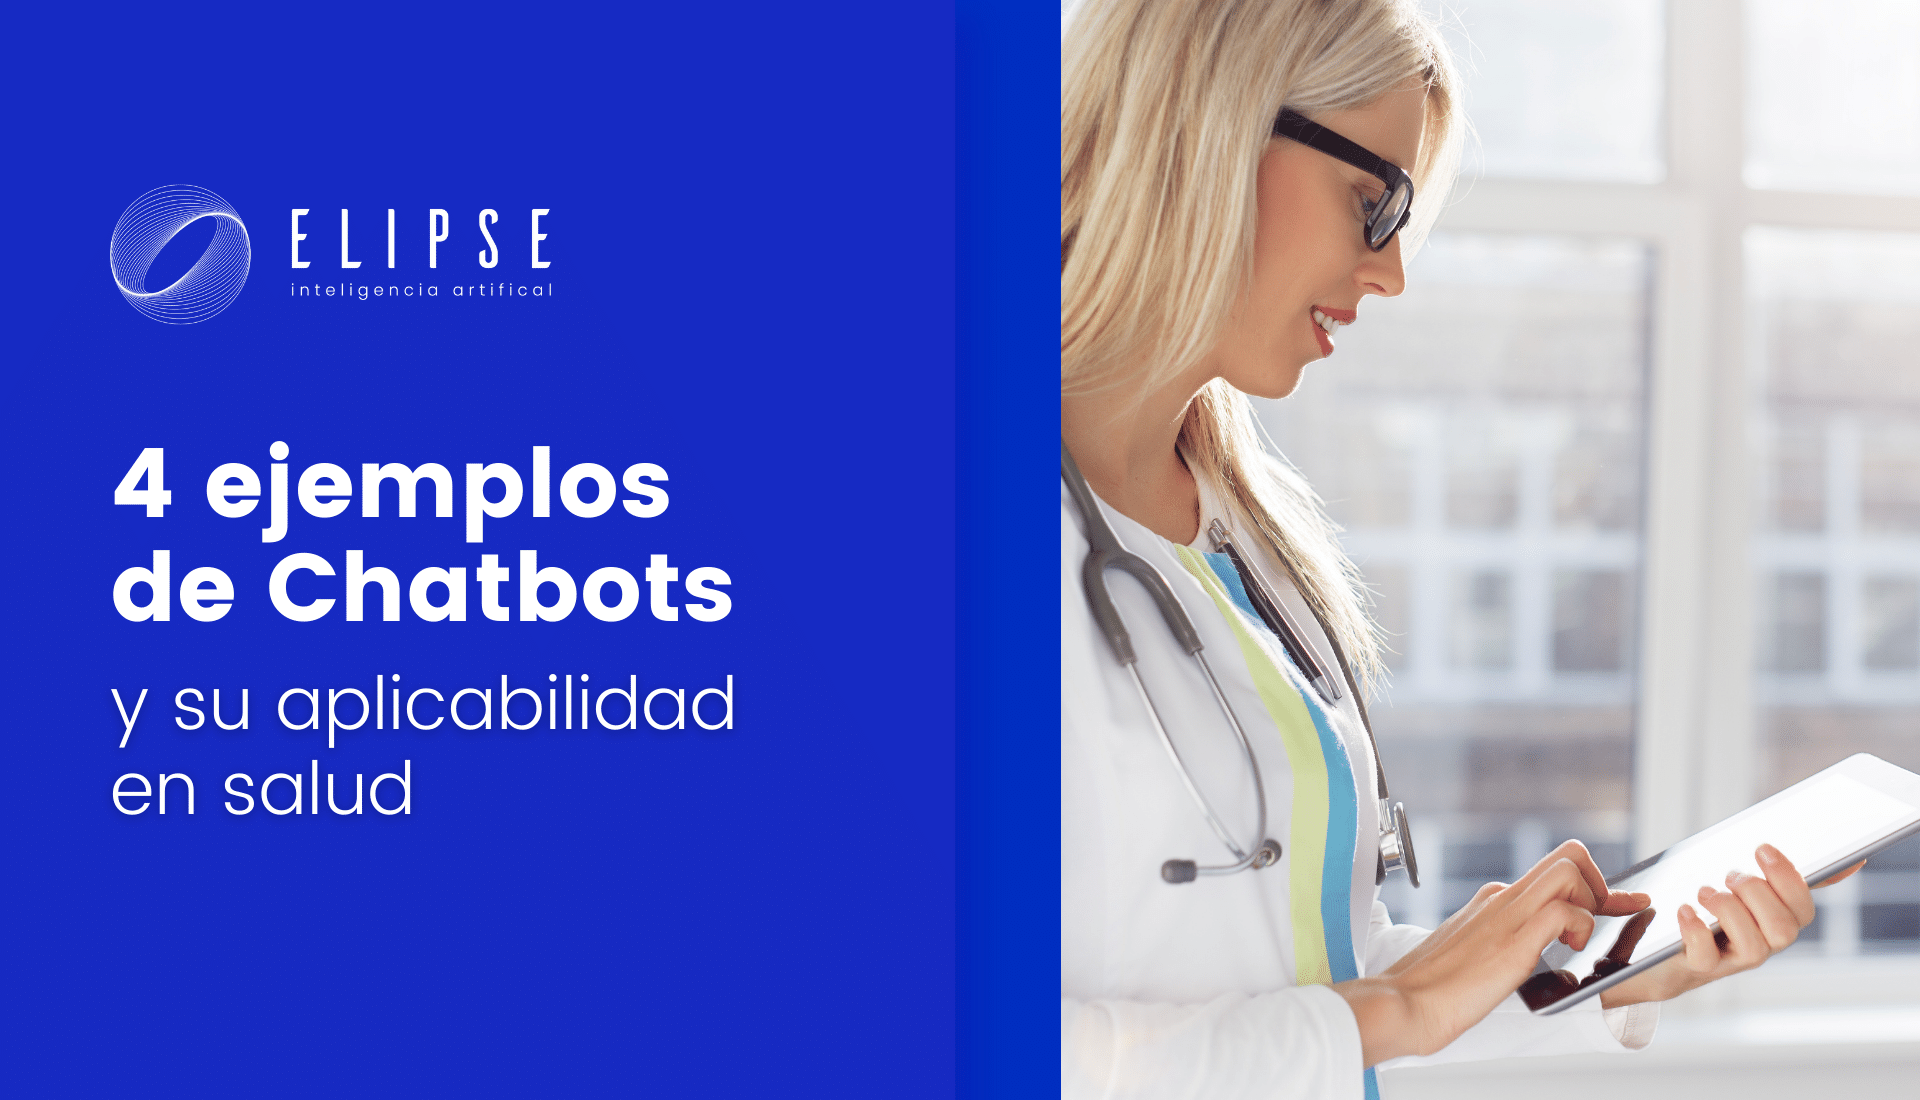 4 ejemplos de Chatbots en salud